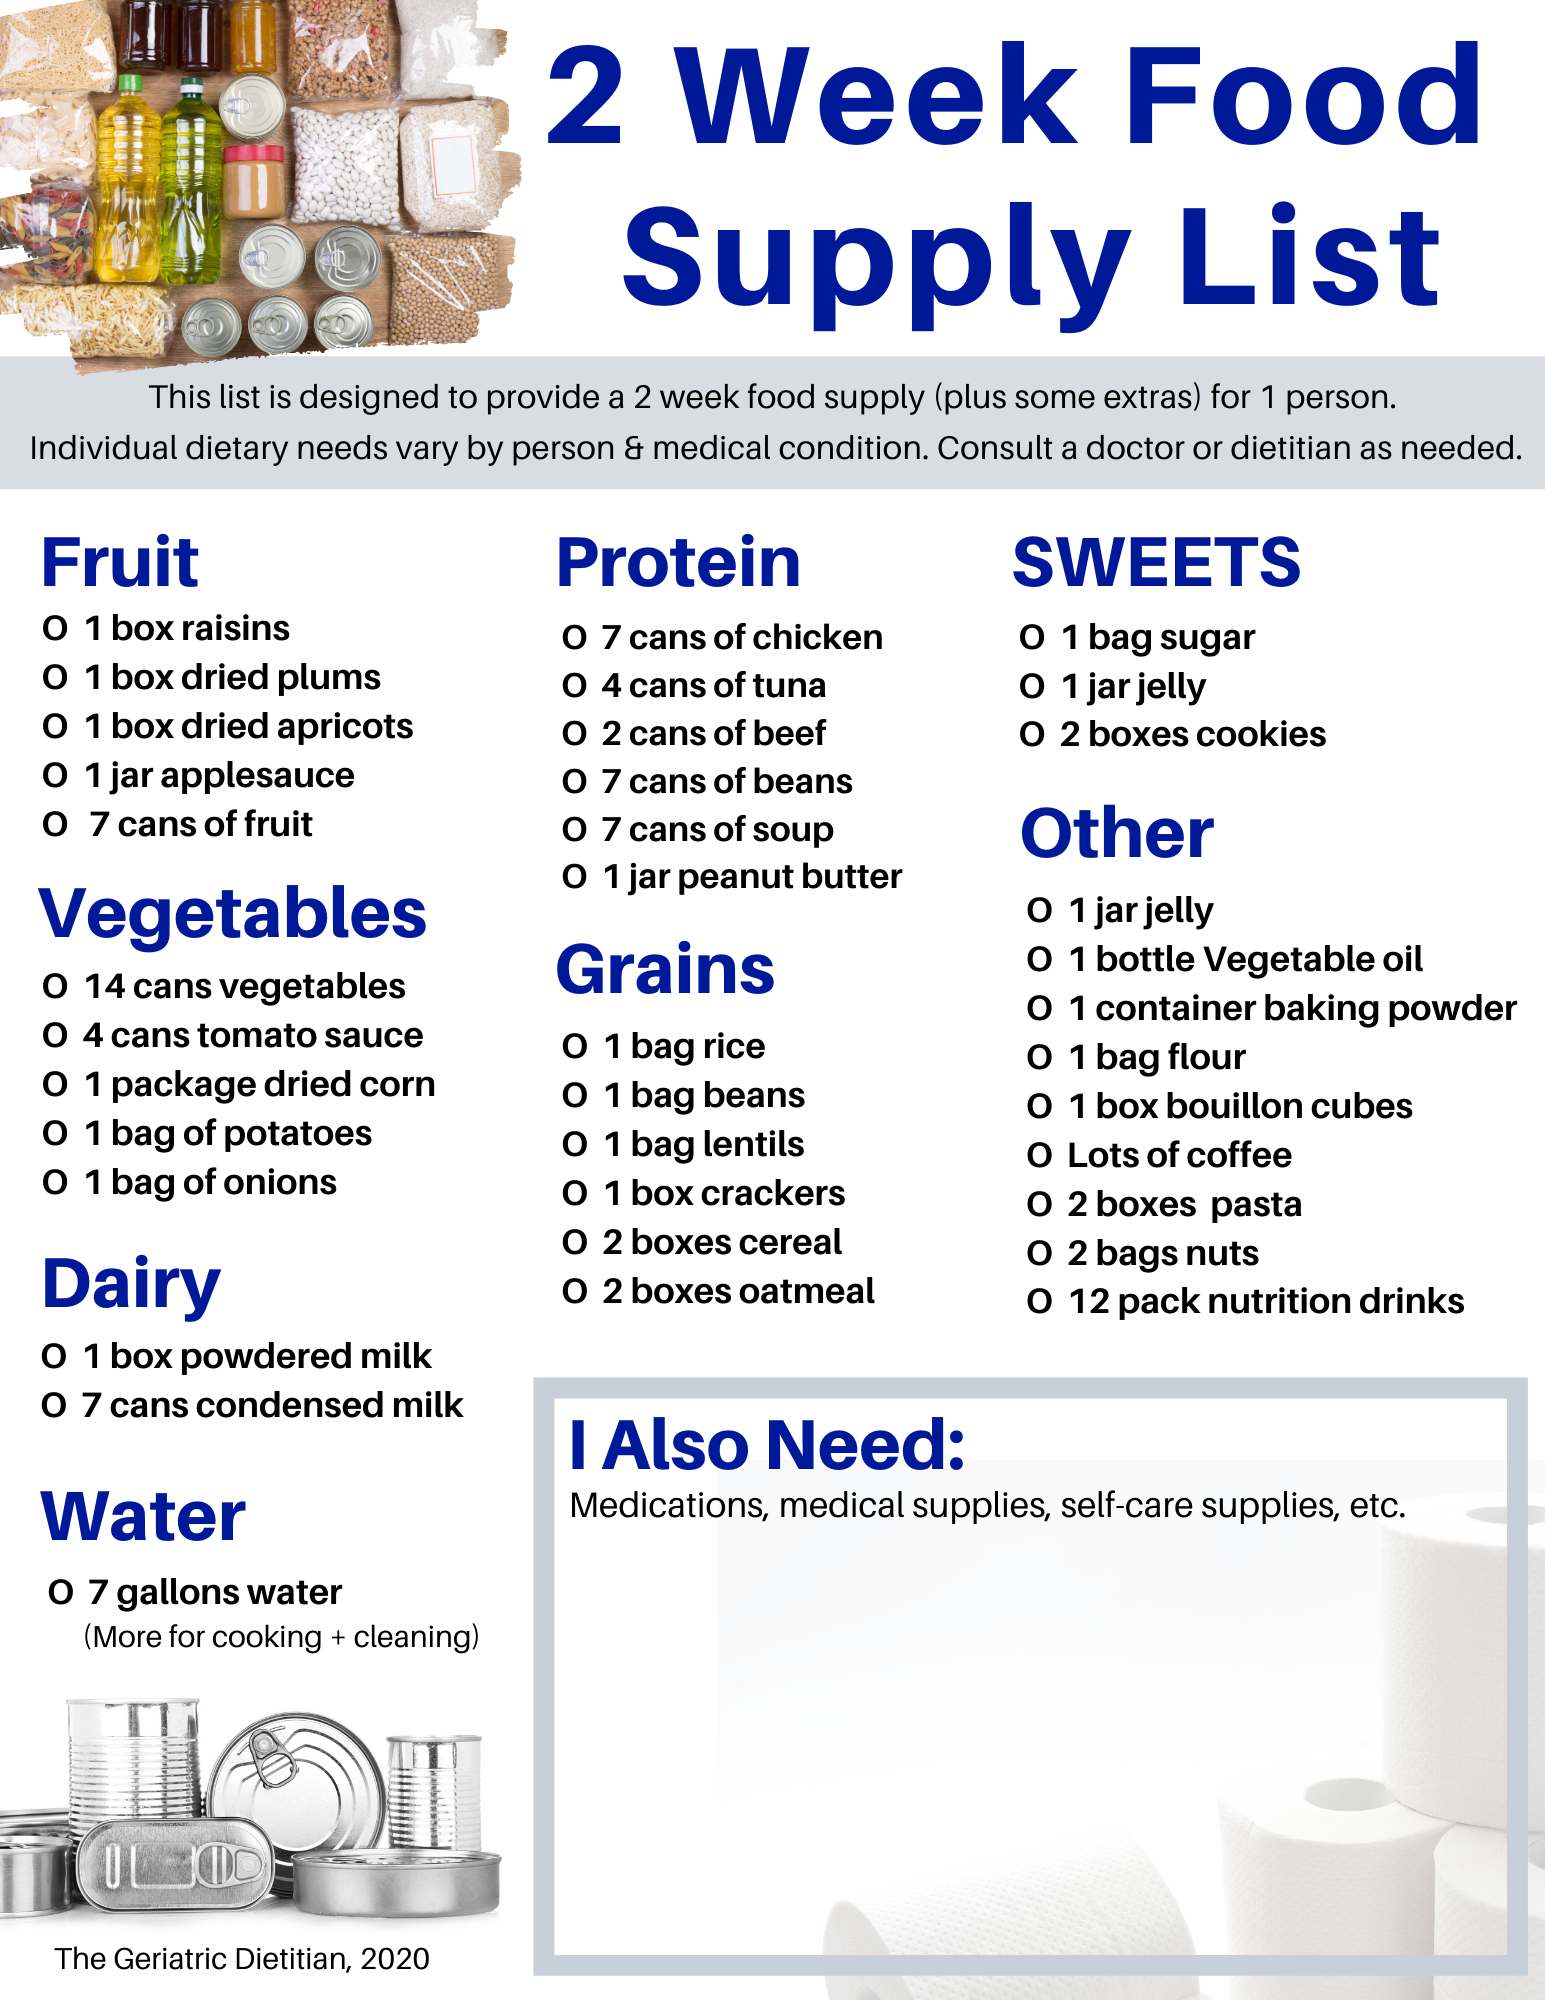 2 week food supply list free download the geriatric